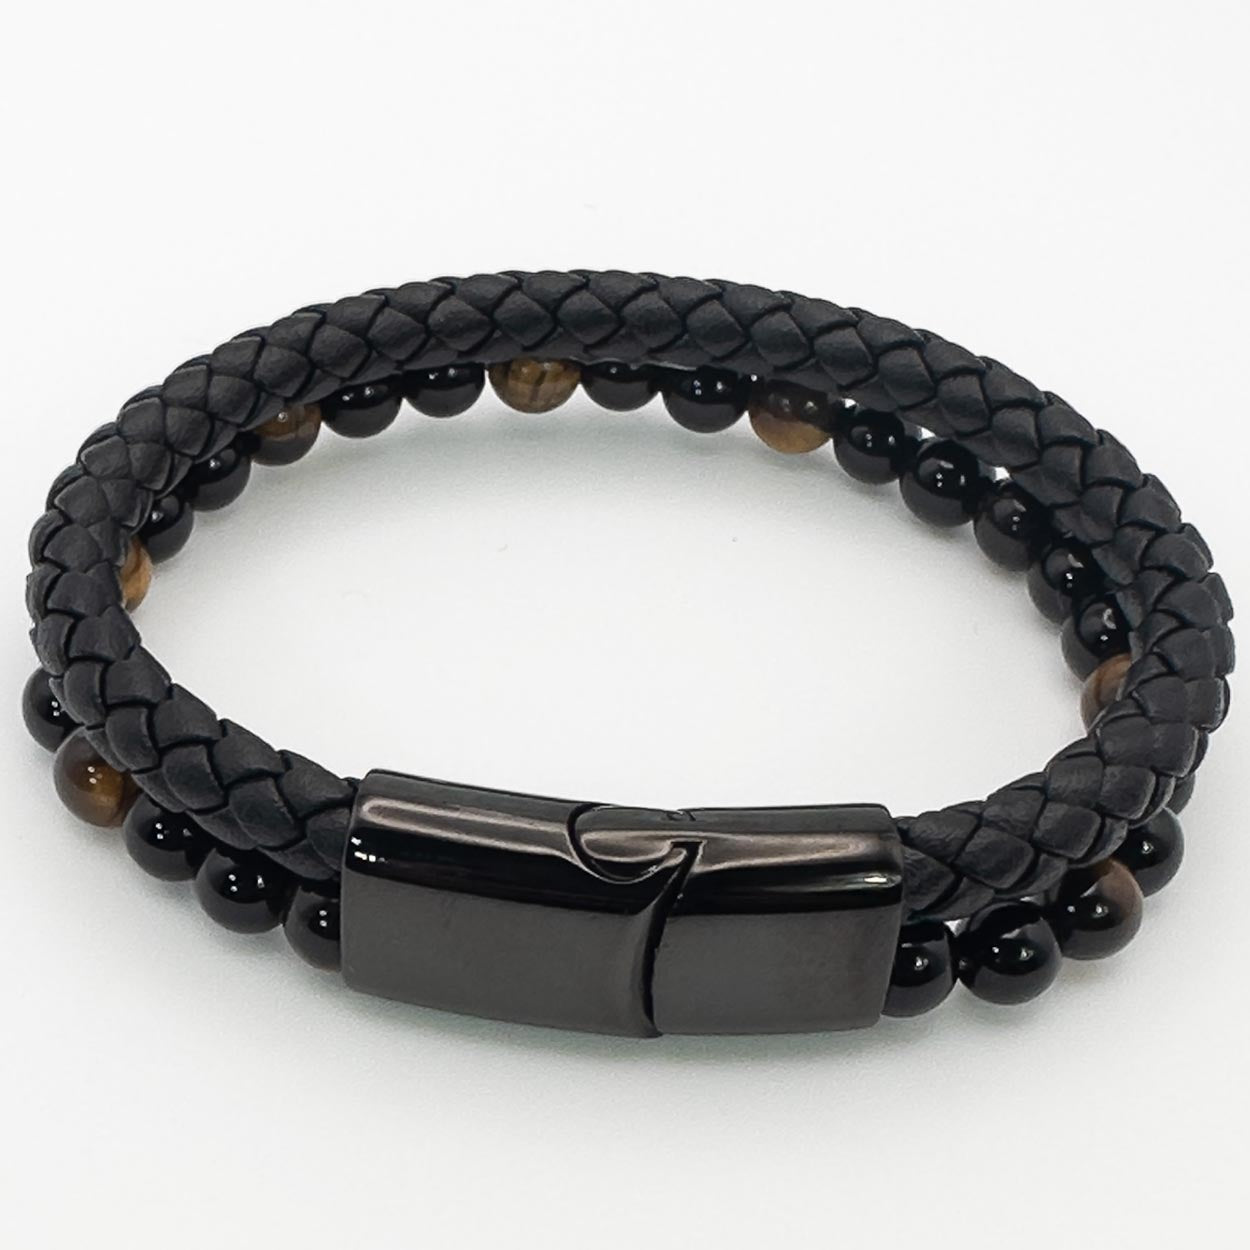 The Black Duo Leather Bracelet